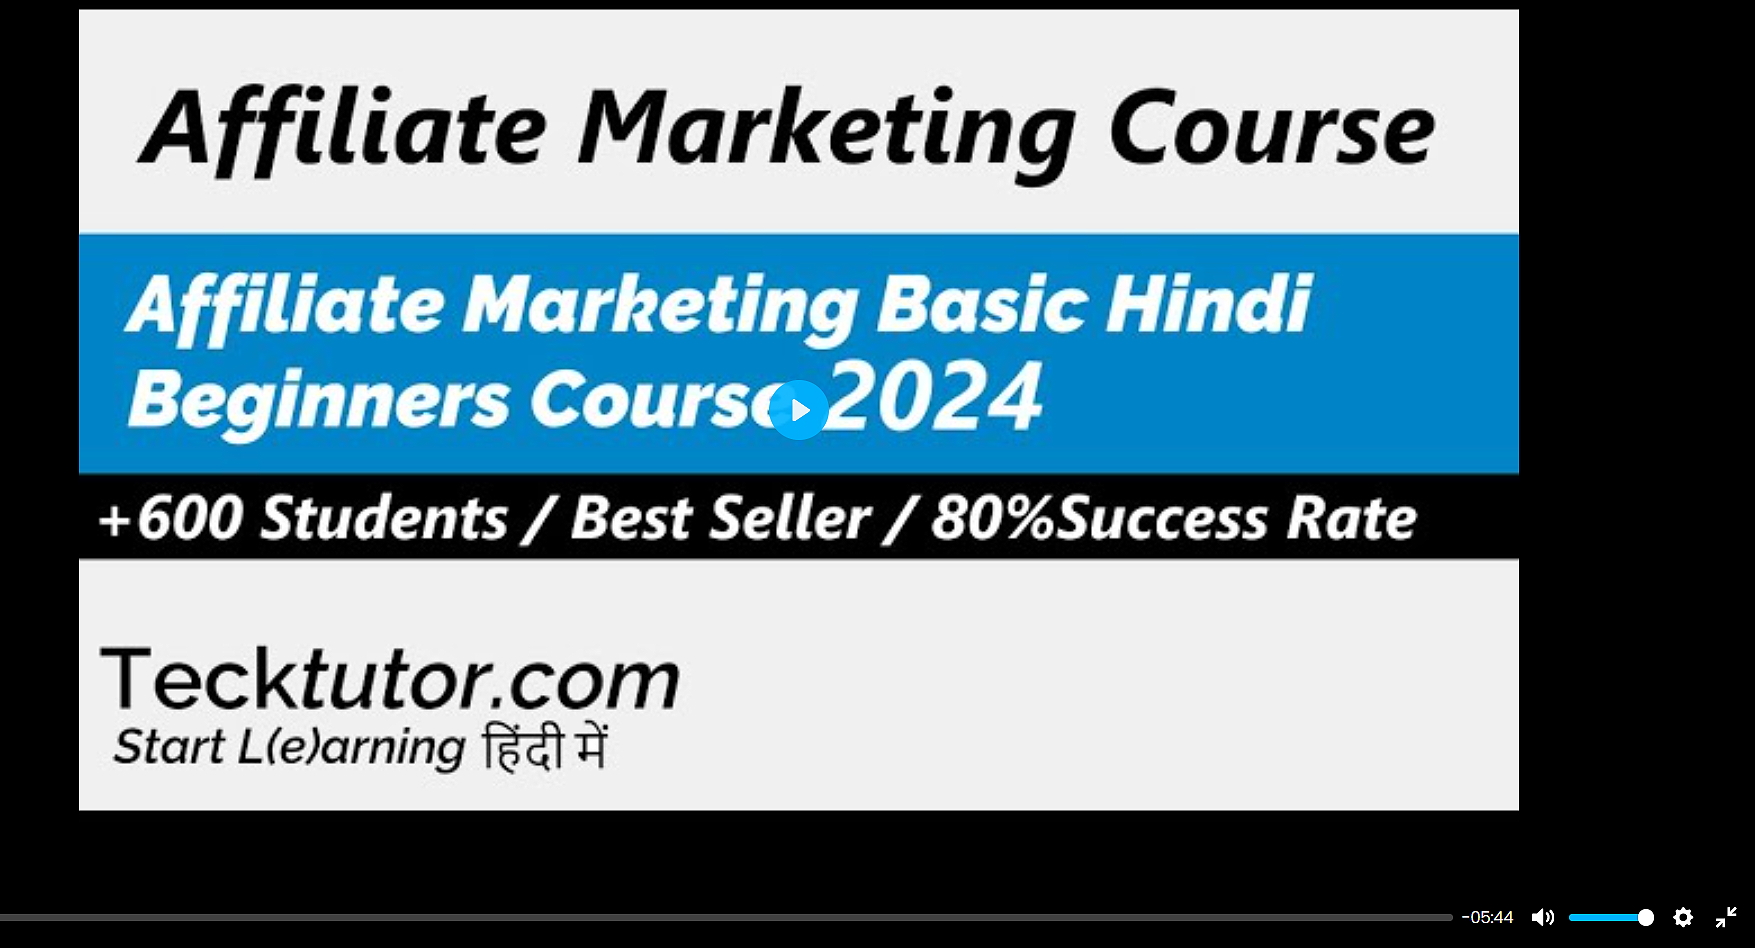 Affiliate Marketing Course India 2024